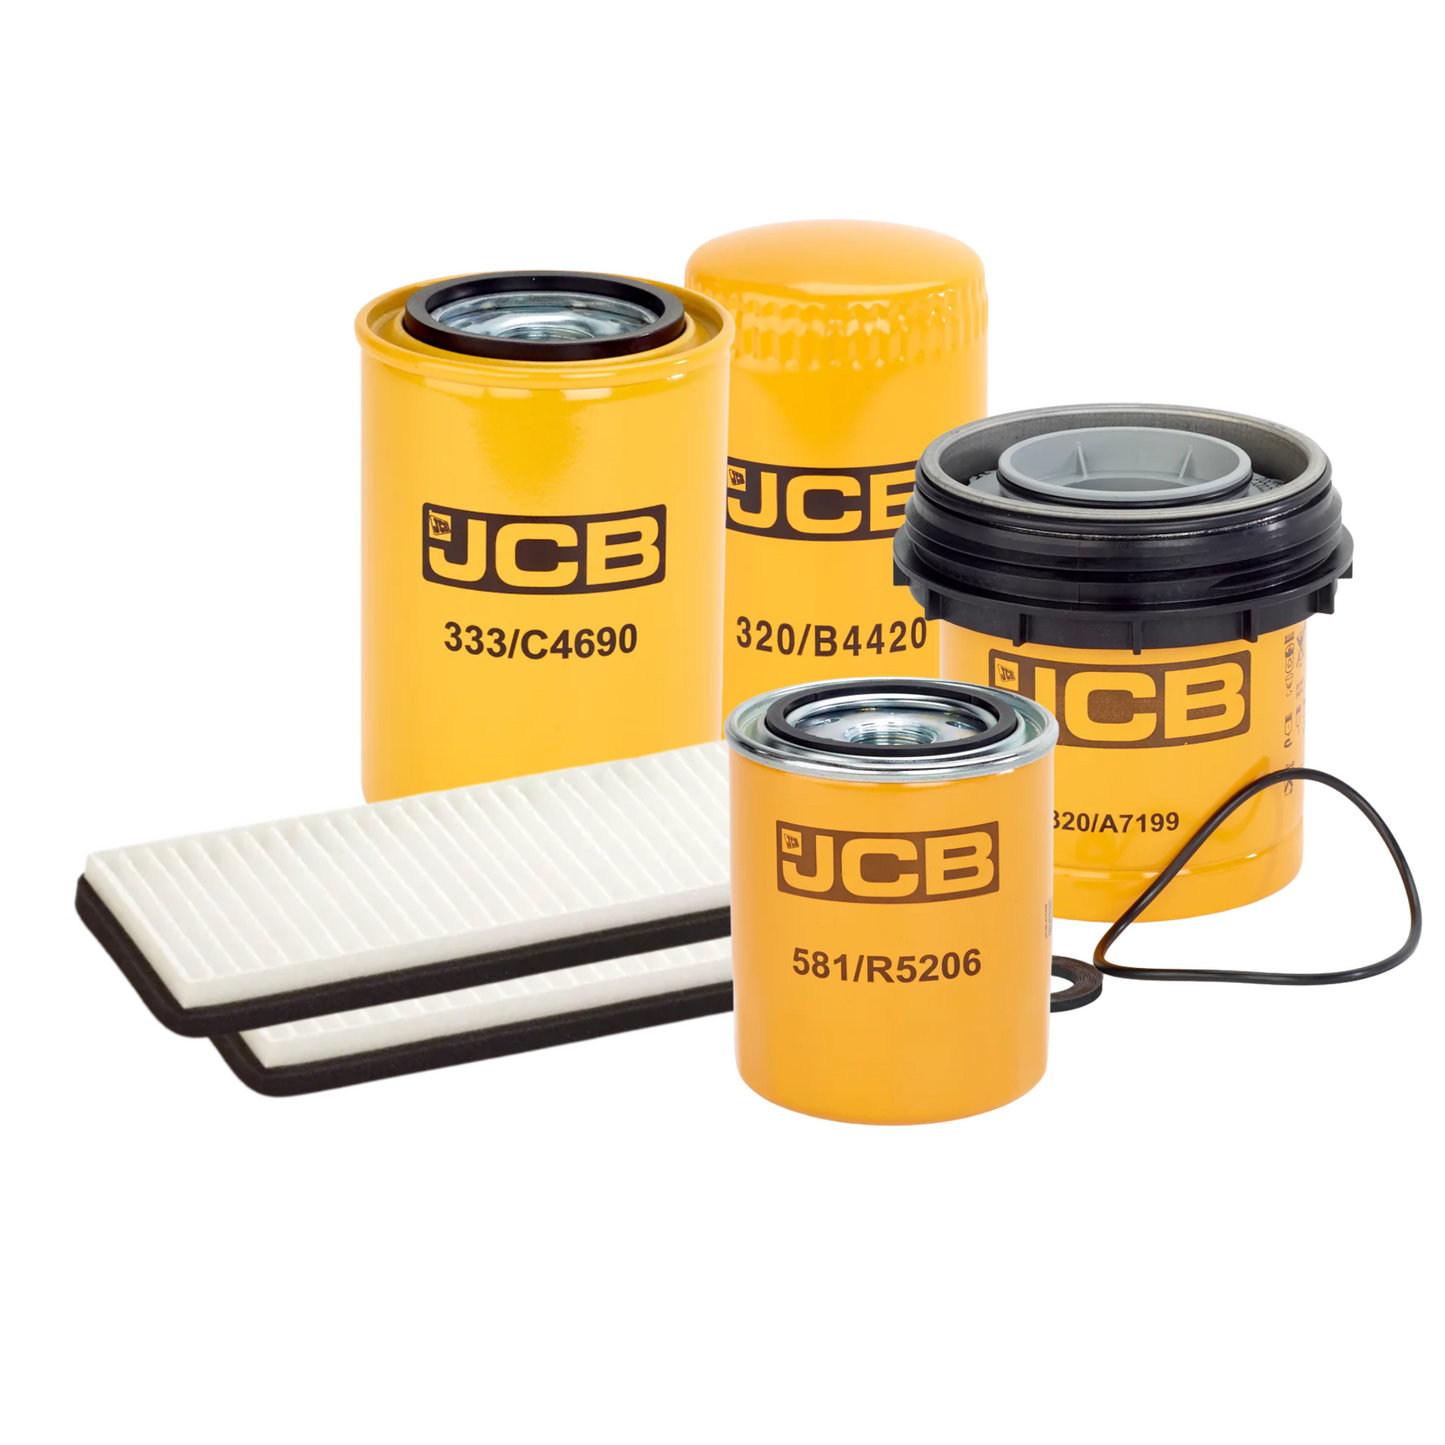 JCB 535-95 1500 Hour Filter Service Kit